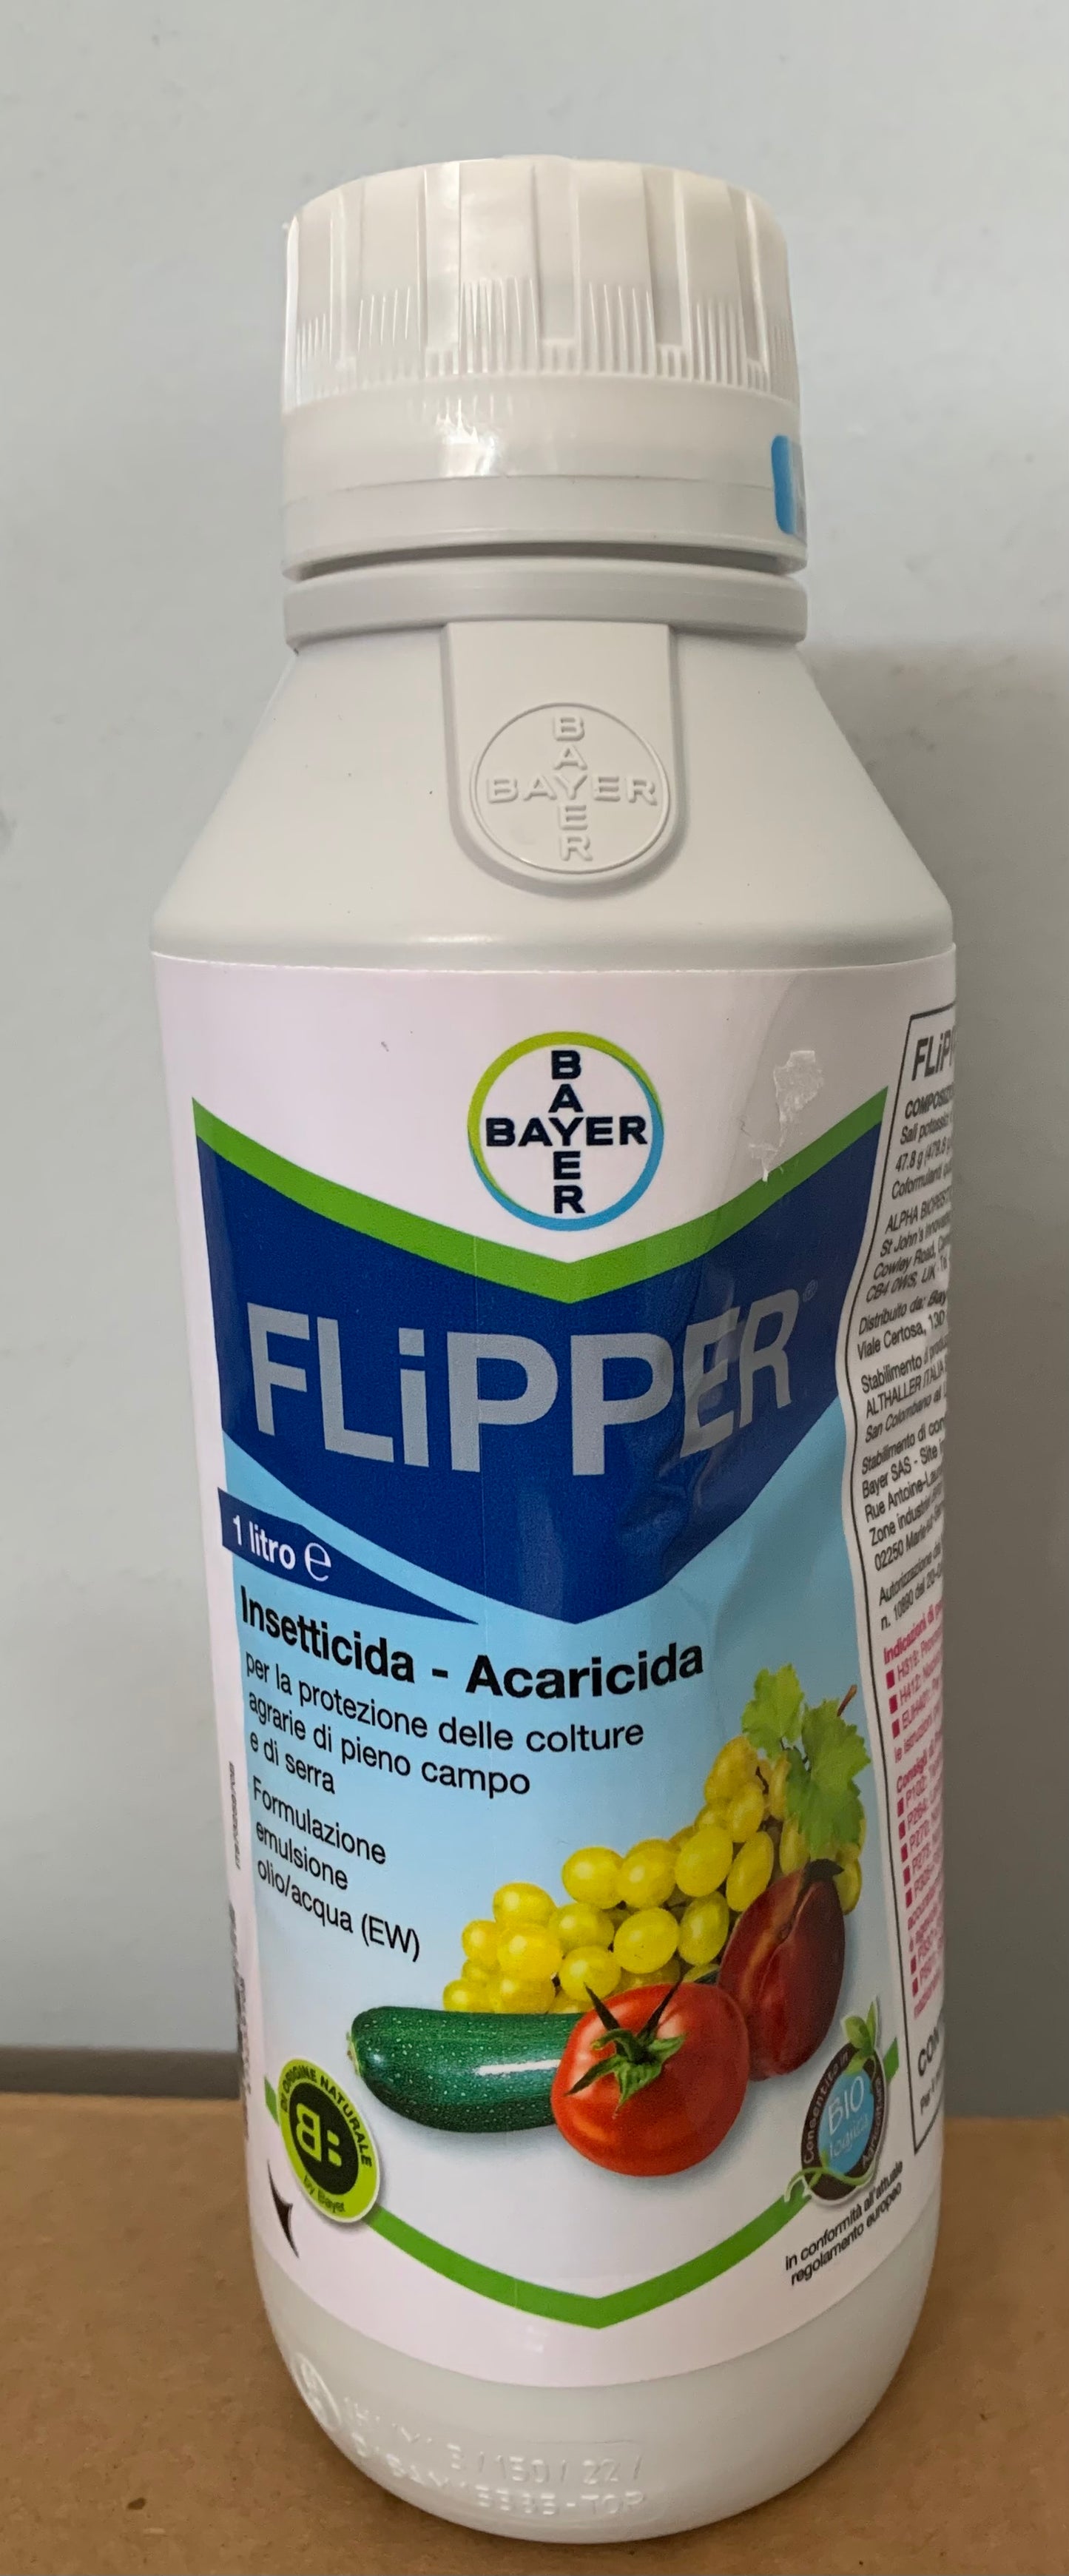 FLIPPER 1LT INSETTICIDA ACARICIDA